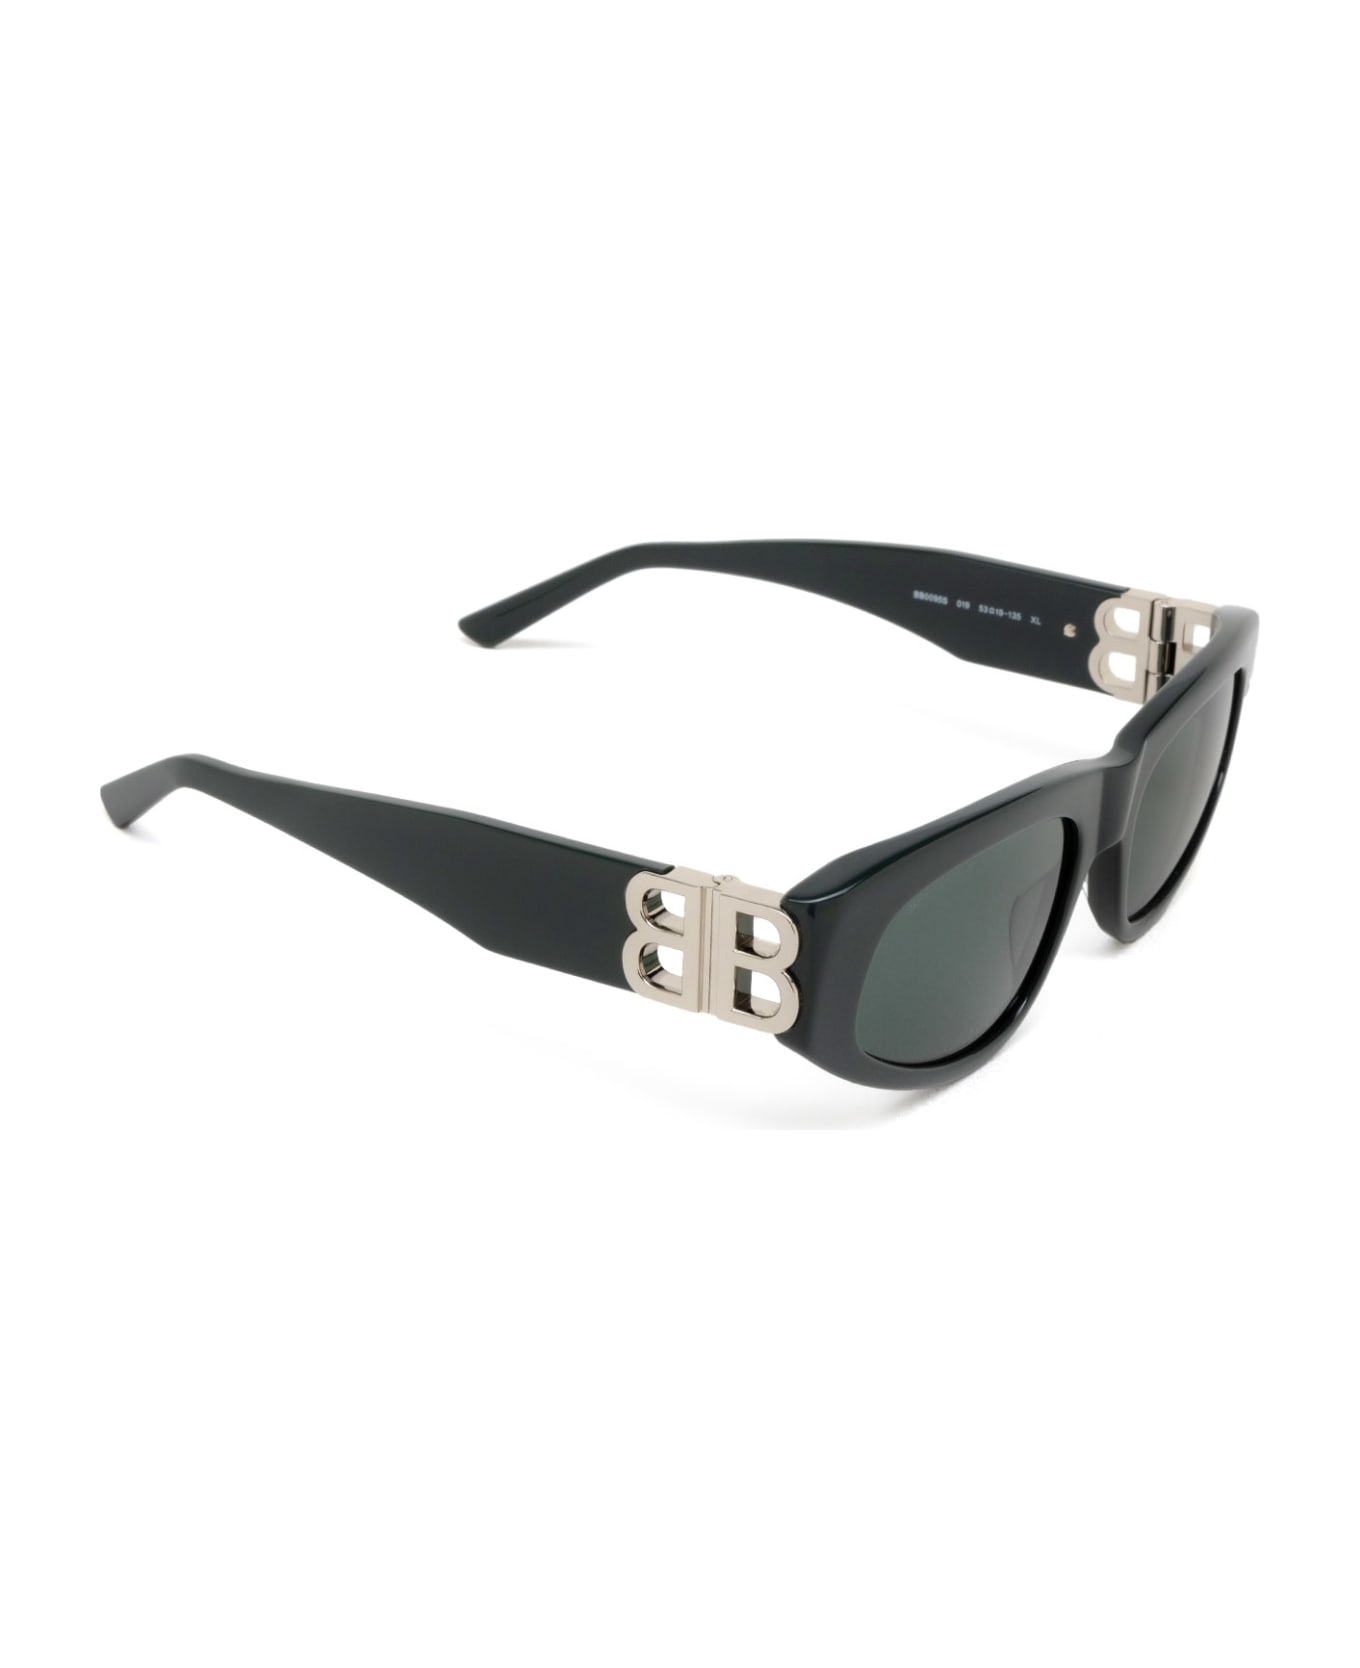 Balenciaga Eyewear Bb0095s Sunglasses - Green サングラス